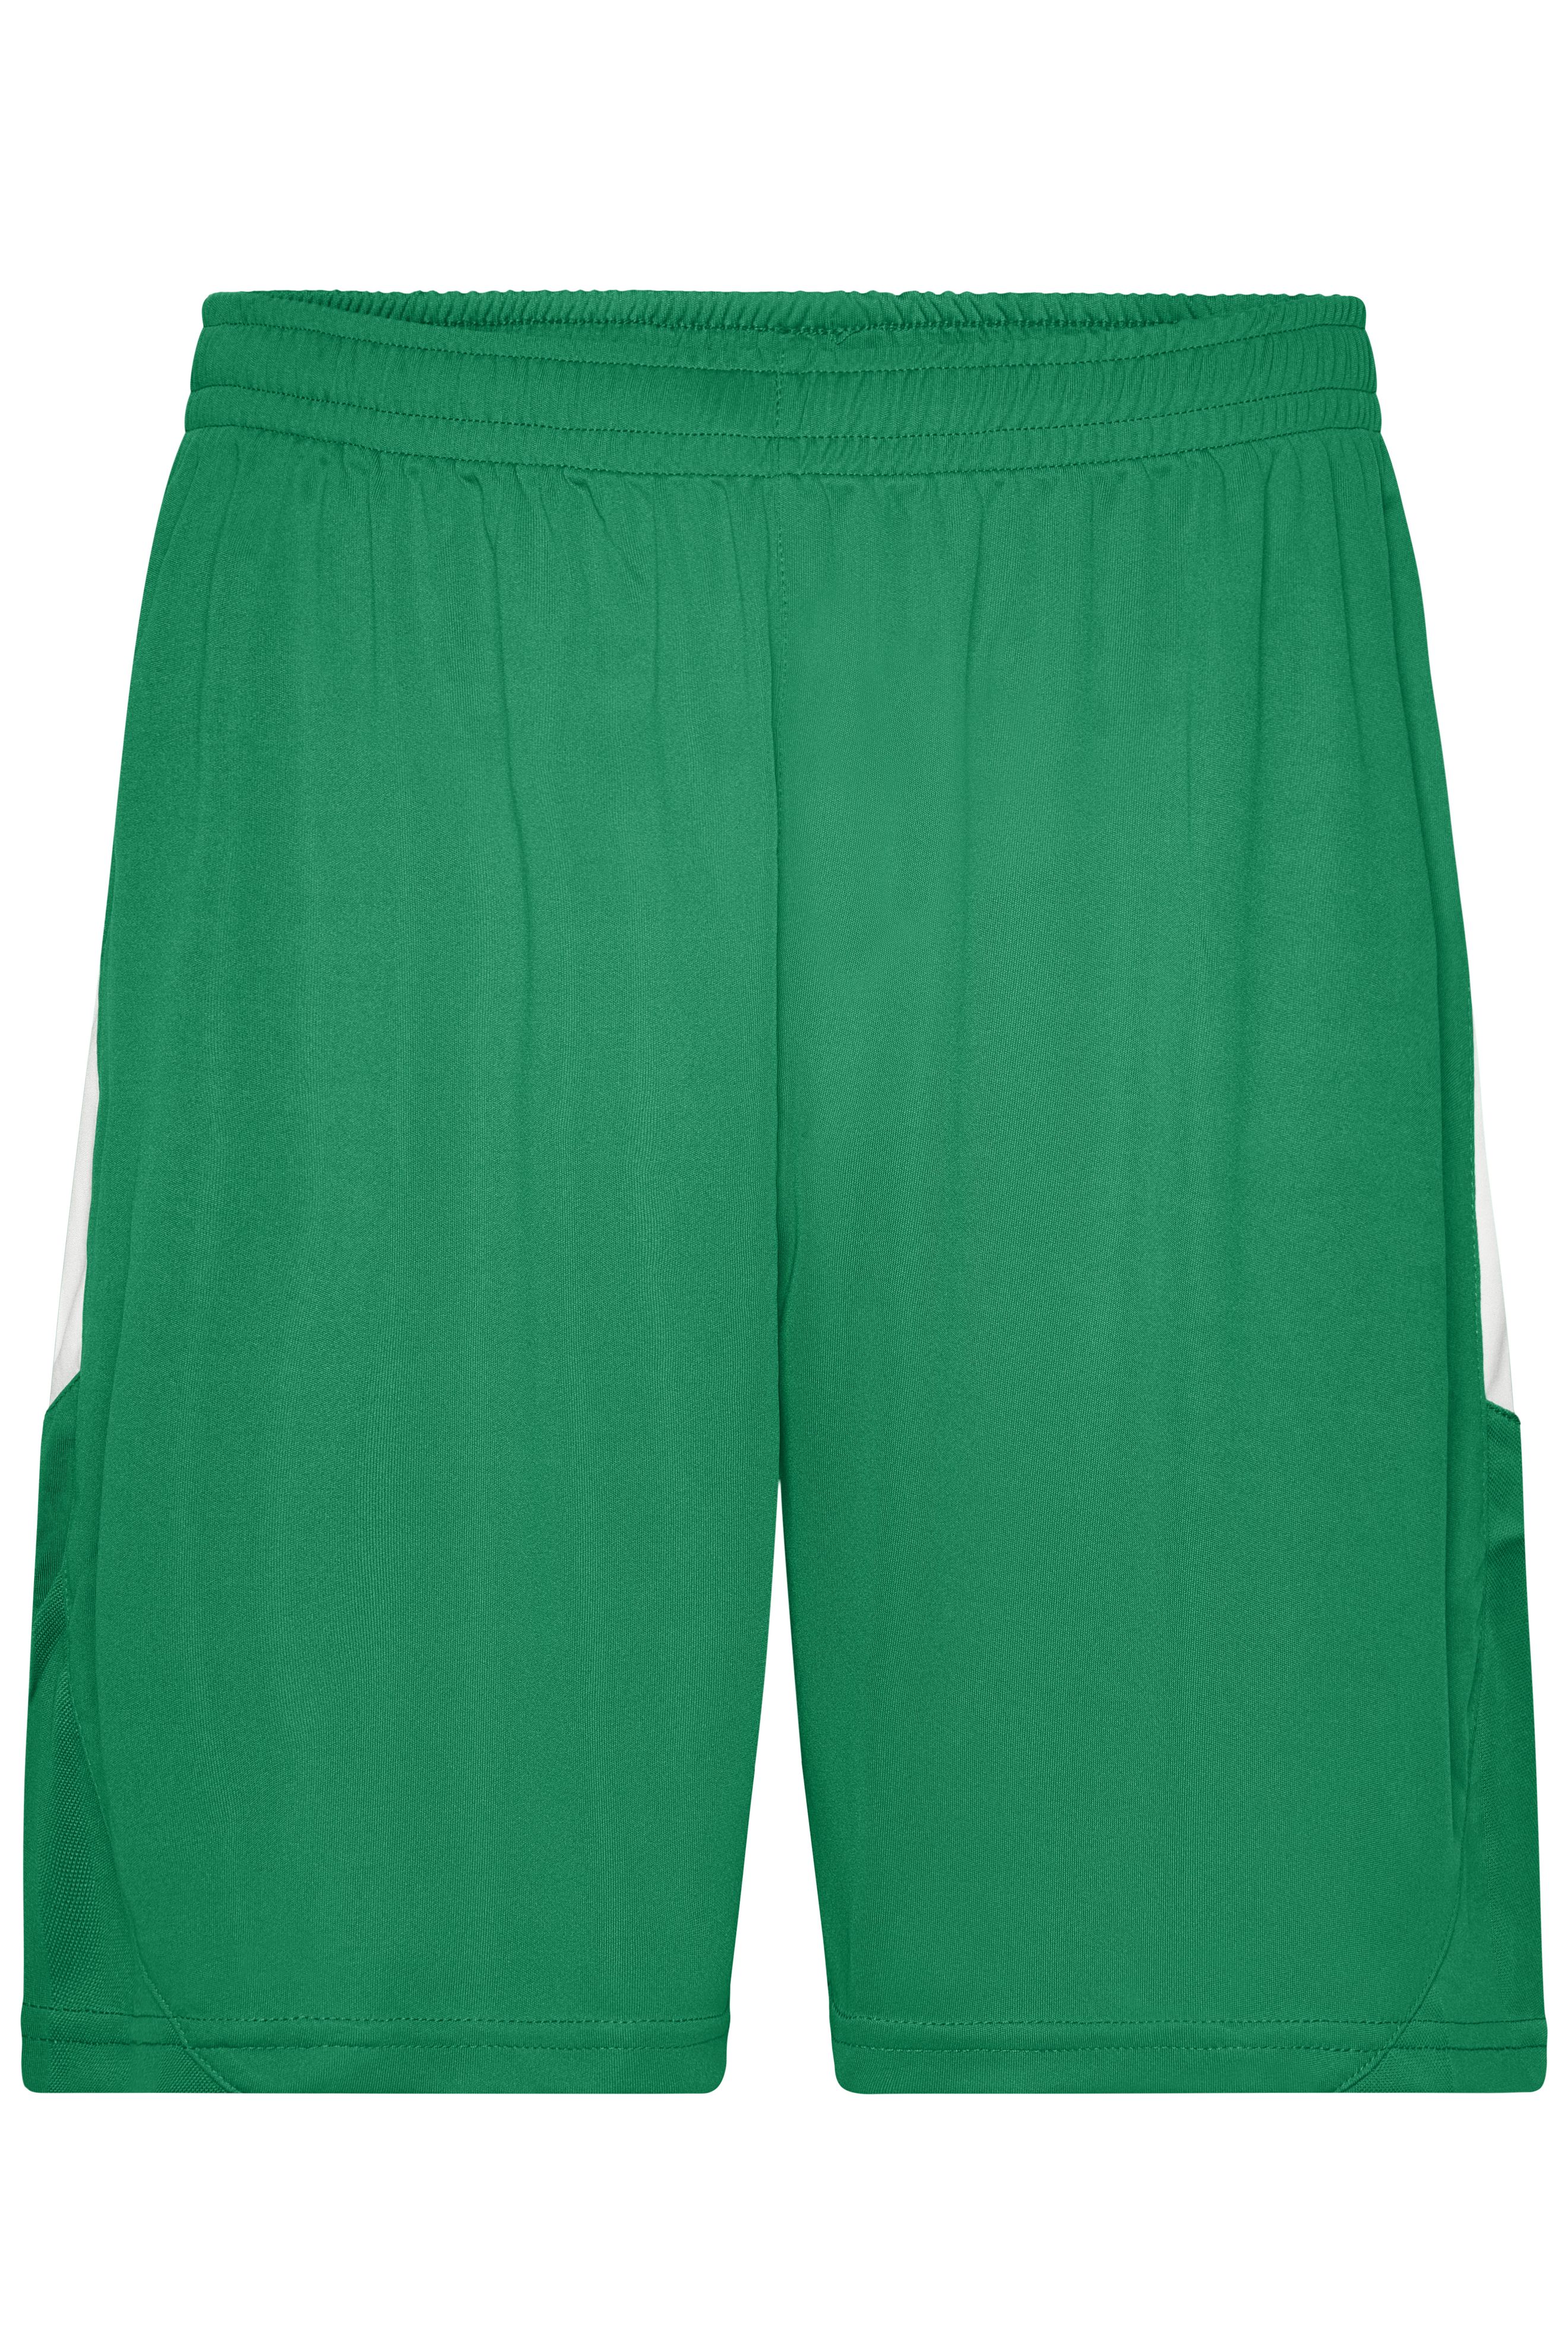 Unisex Competition Team Shorts Green/white-Daiber